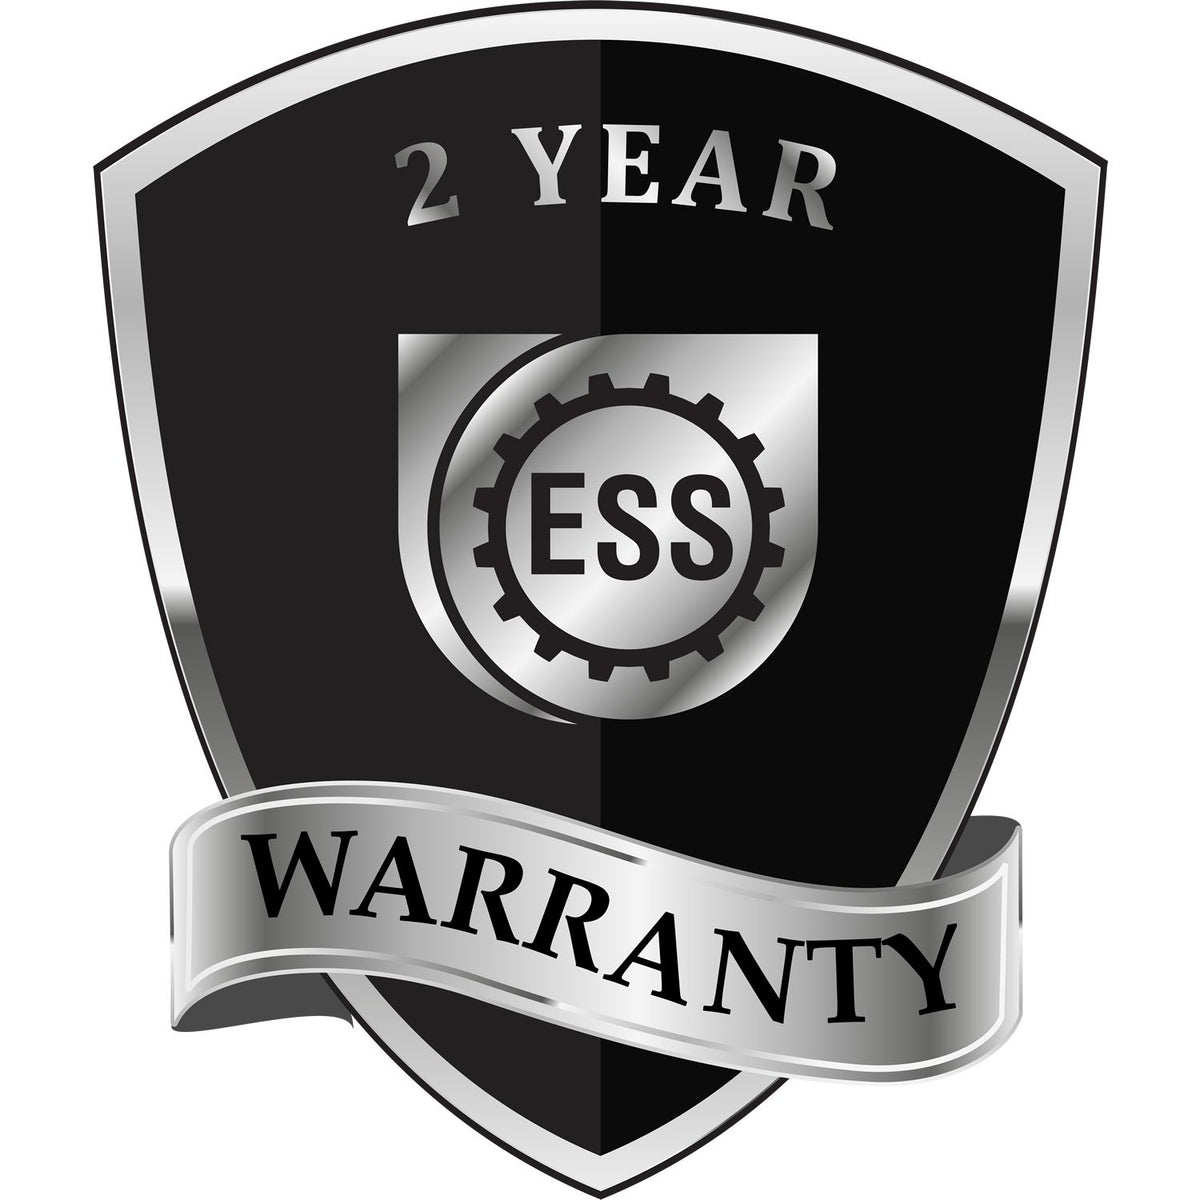 A black and silver badge or emblem showing warranty information for the Hybrid Kansas Land Surveyor Seal